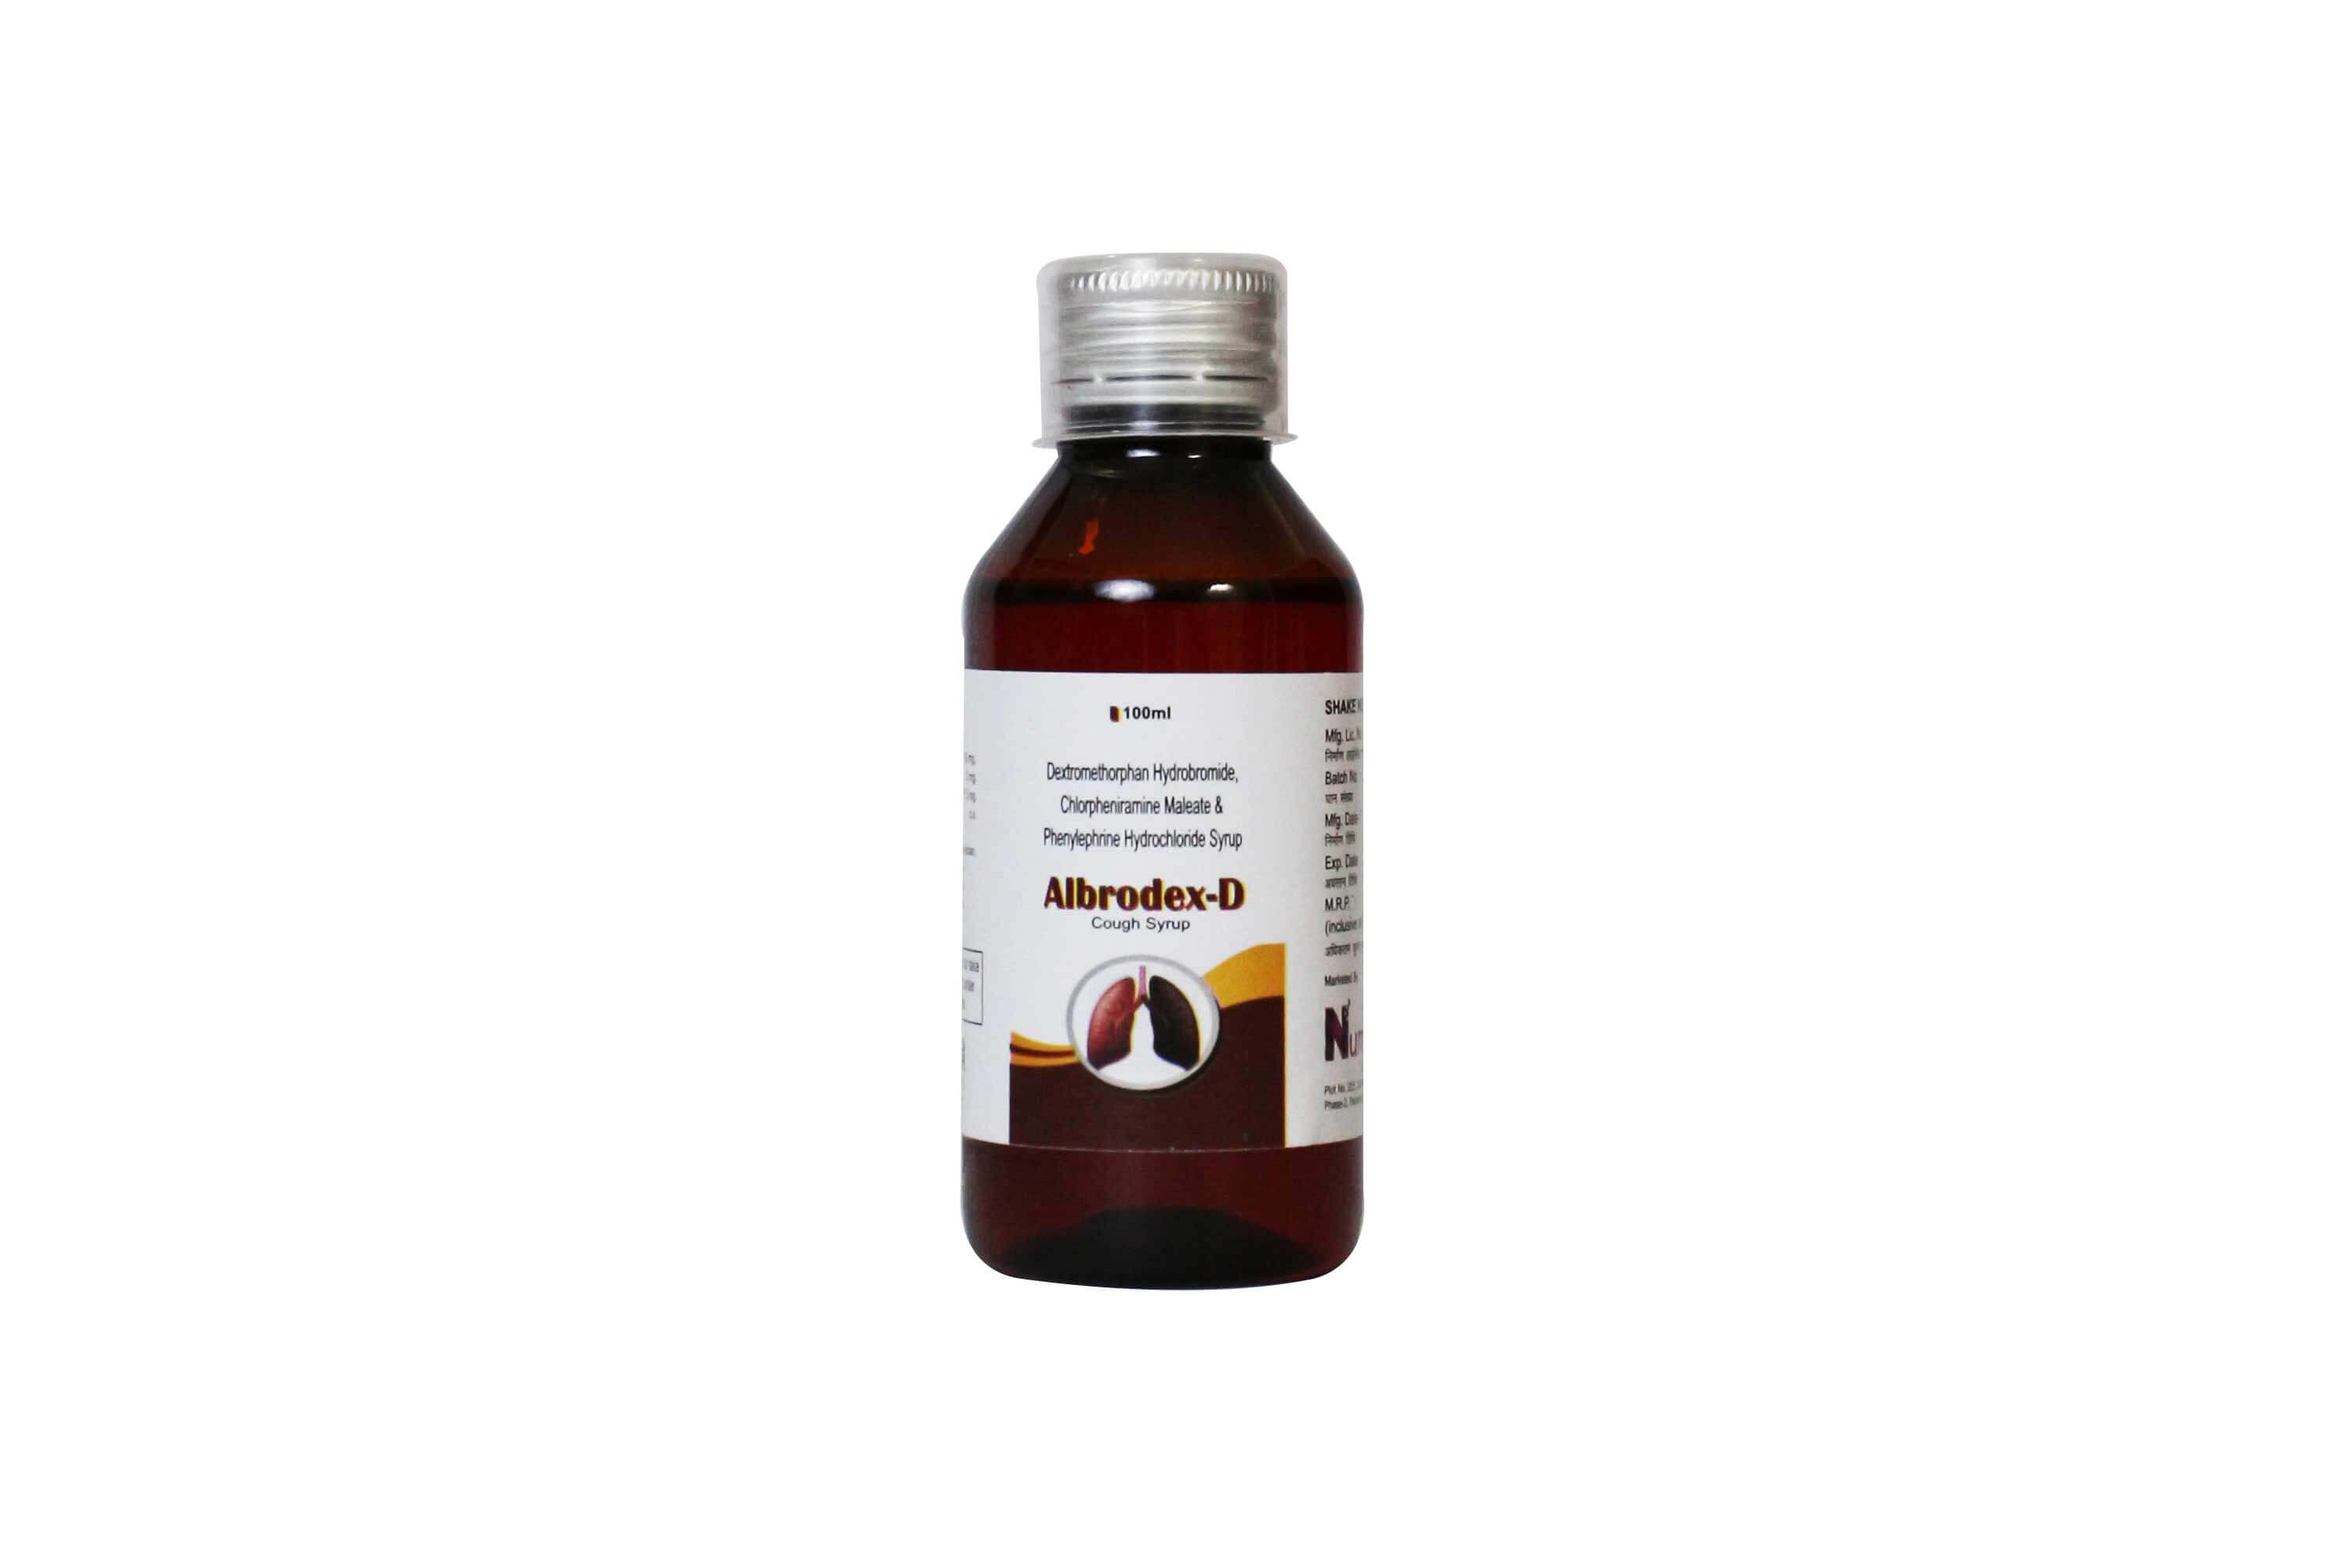 Product Name: Albrodex D, Compositions of Albrodex D are Dextromethorphan, Hydrobromide, Chorpheniramine Meleate &  Phenylphrine  Hydrochloride Syrup   - Numantis Healthcare